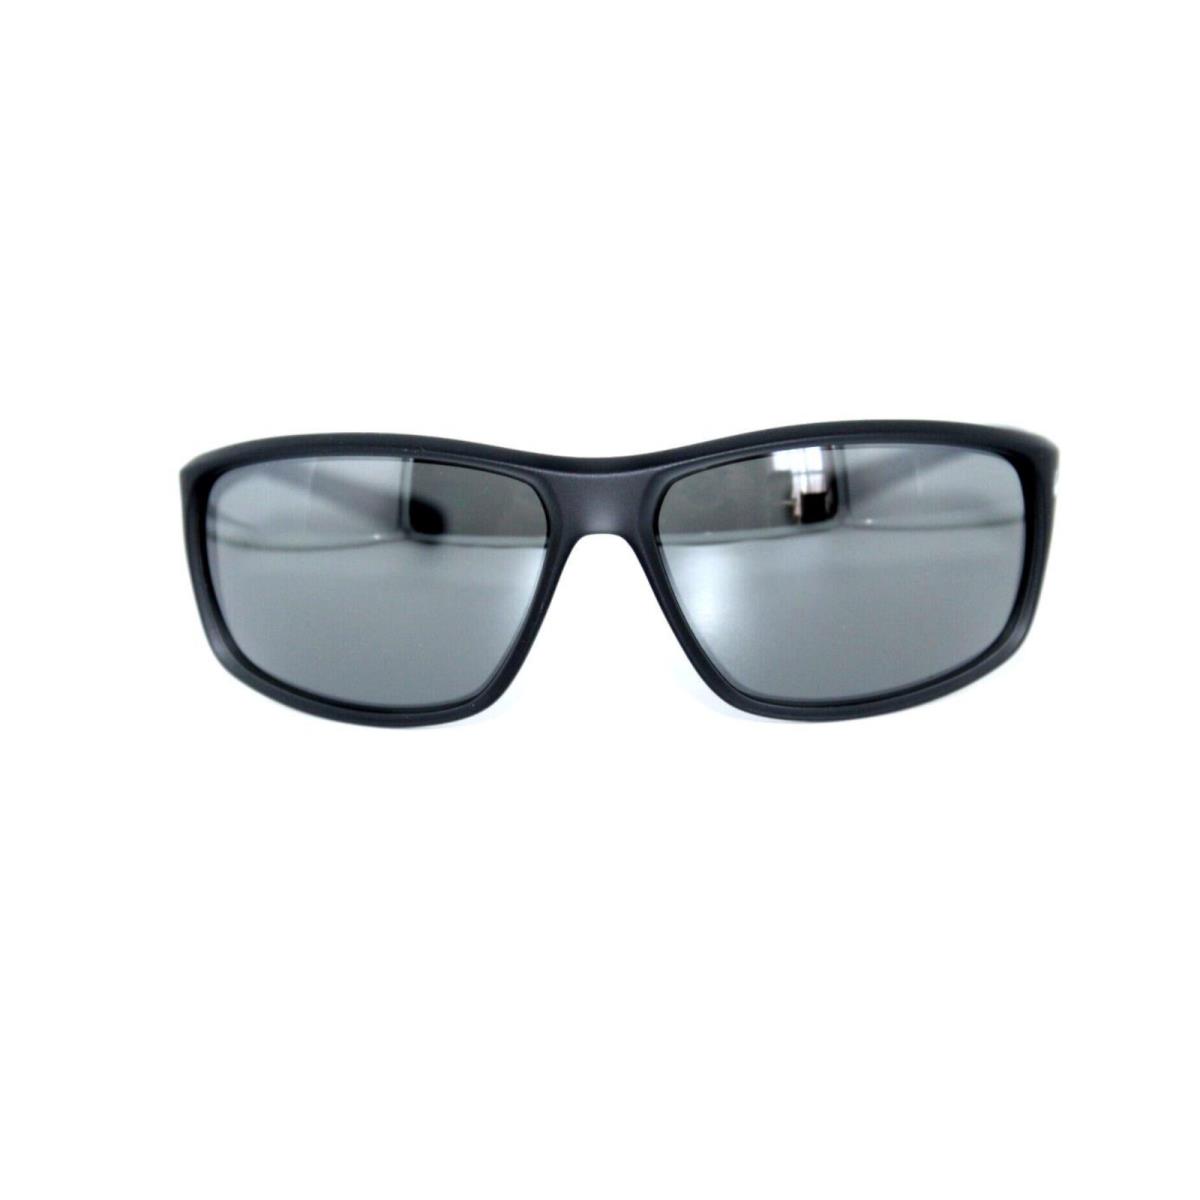 Nike Sunglasses Adrenaline EV1134 010 65 Grey Frames 65MM W/pouch - Frame: Gray, Lens: Gray